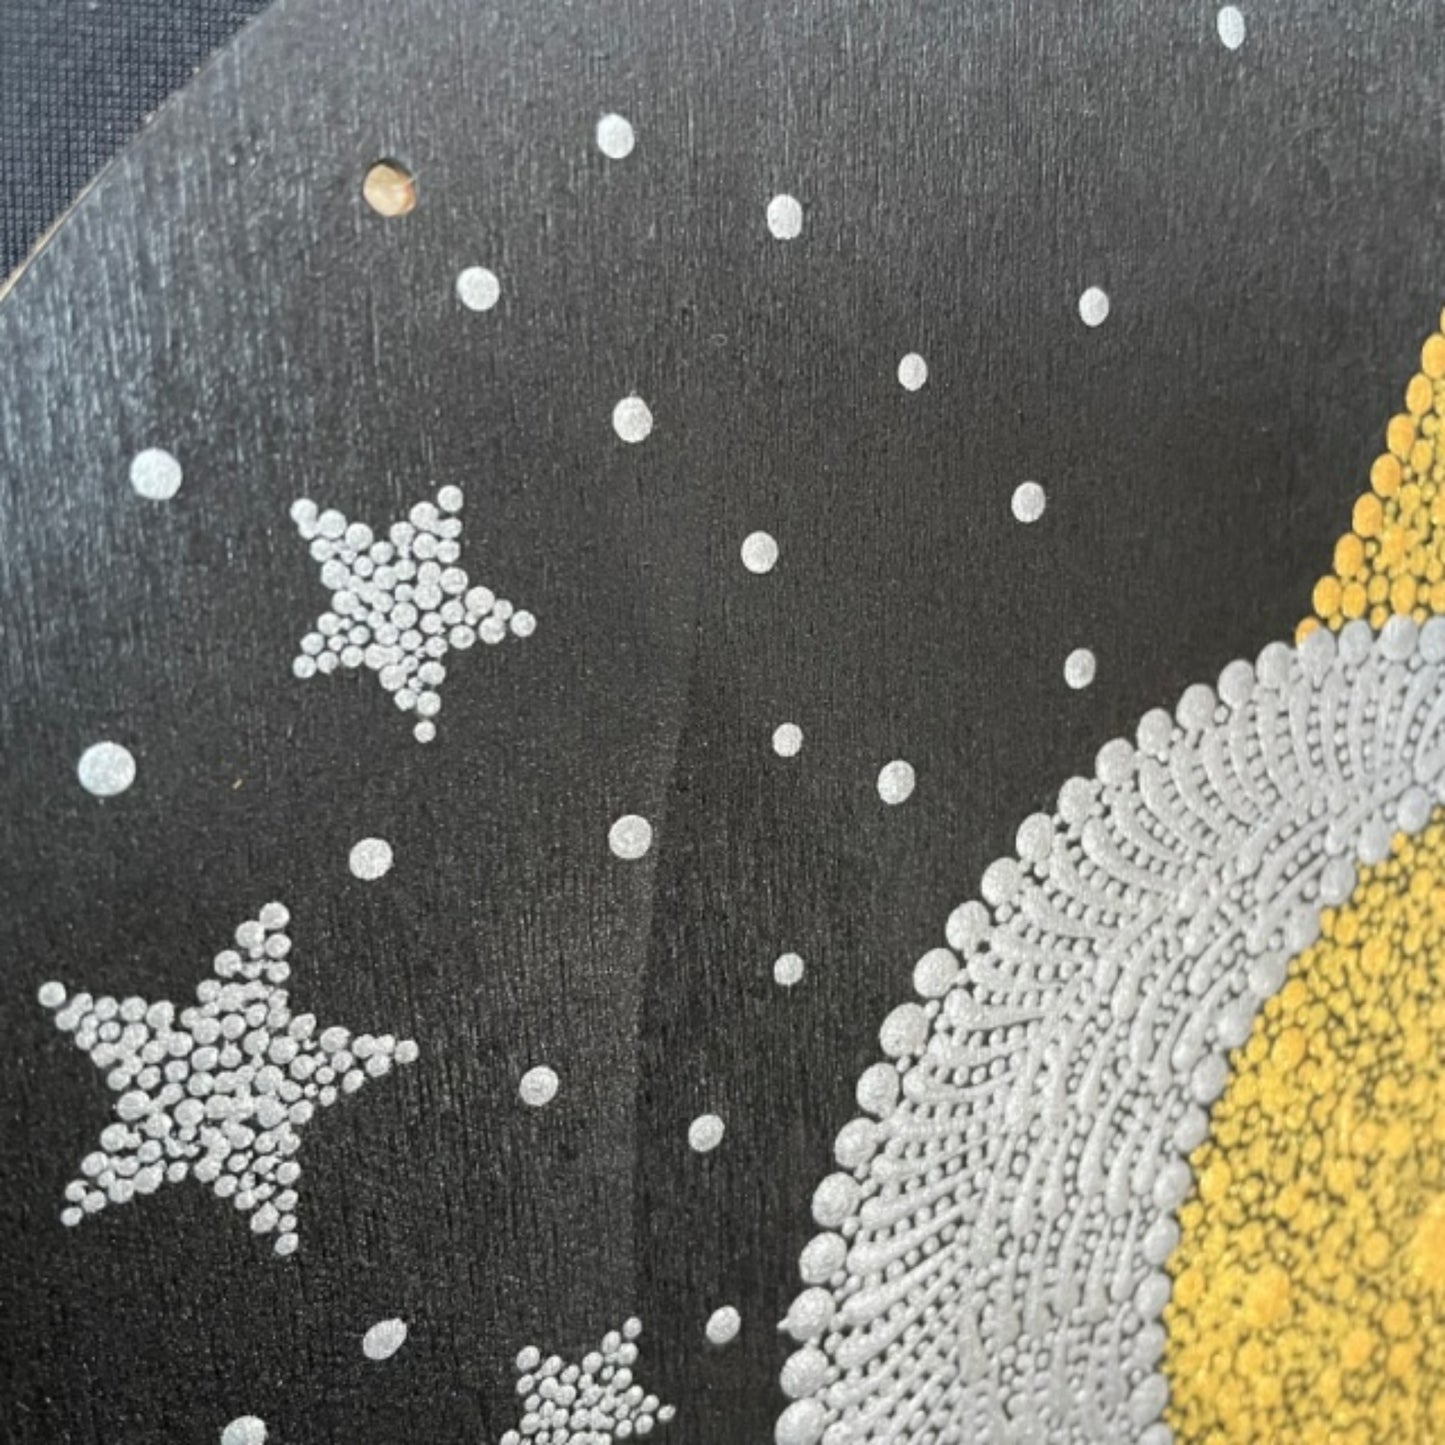 Sun Moon Stars Dot Work Gold and Silver Acrylic Painting Handmade Home Decor